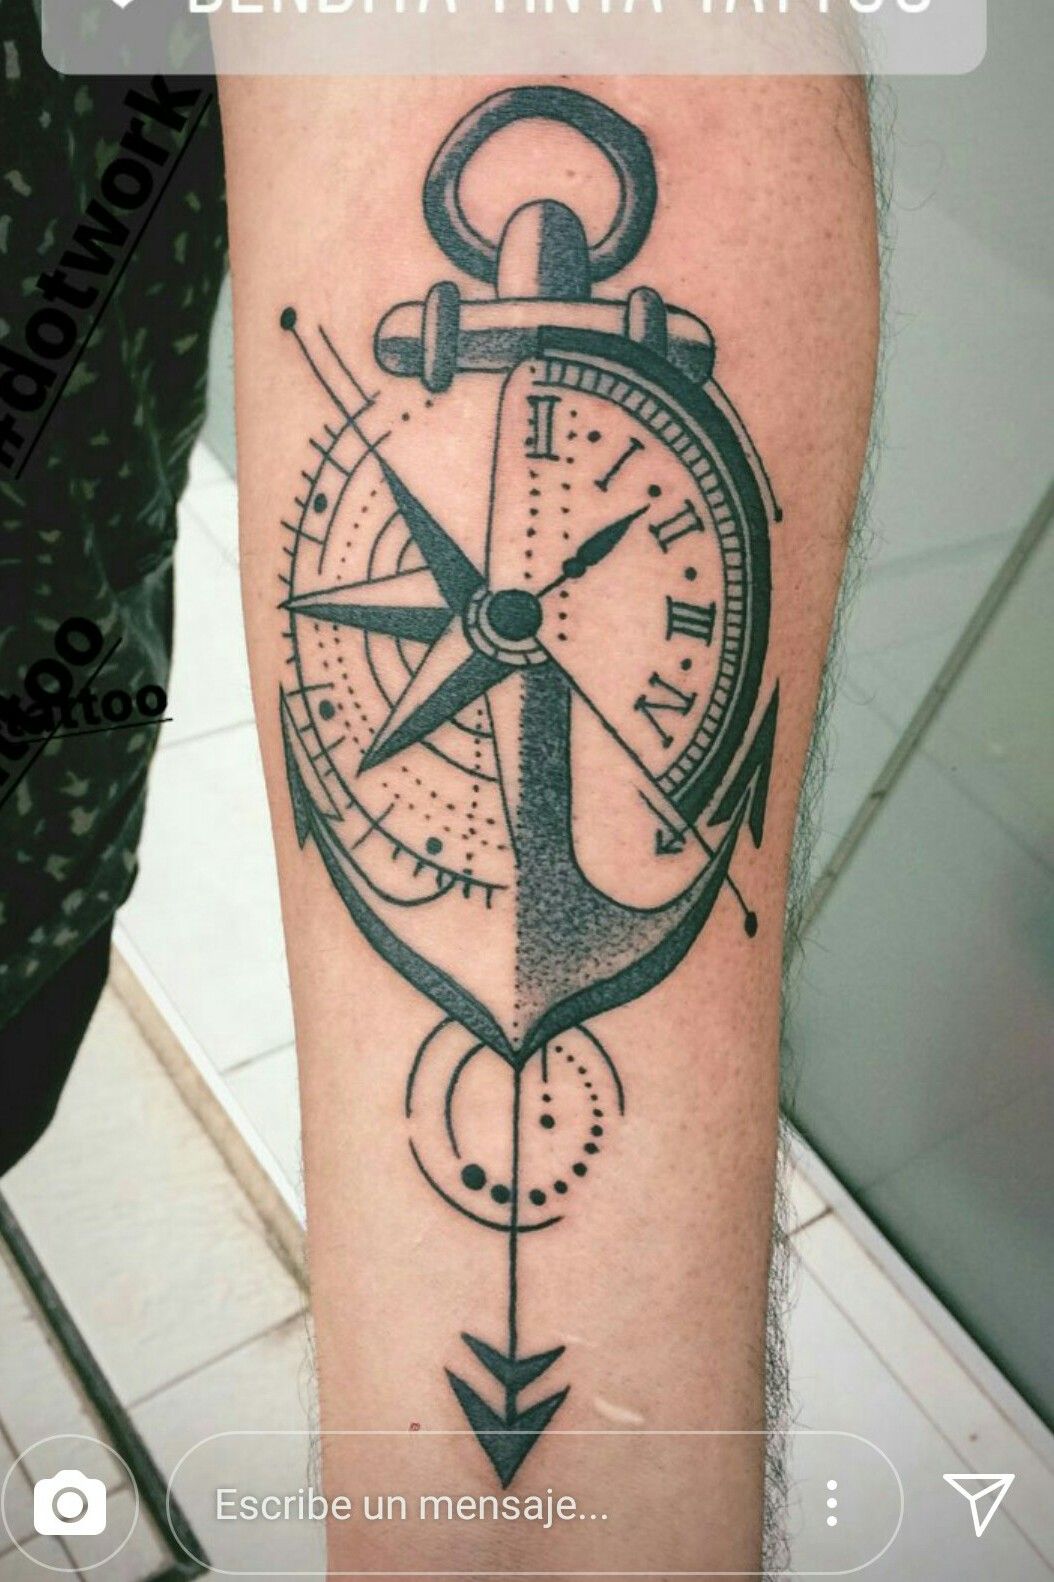 Tattoo uploaded by Laloo Sanabria • #Ancla #brujula #reloj